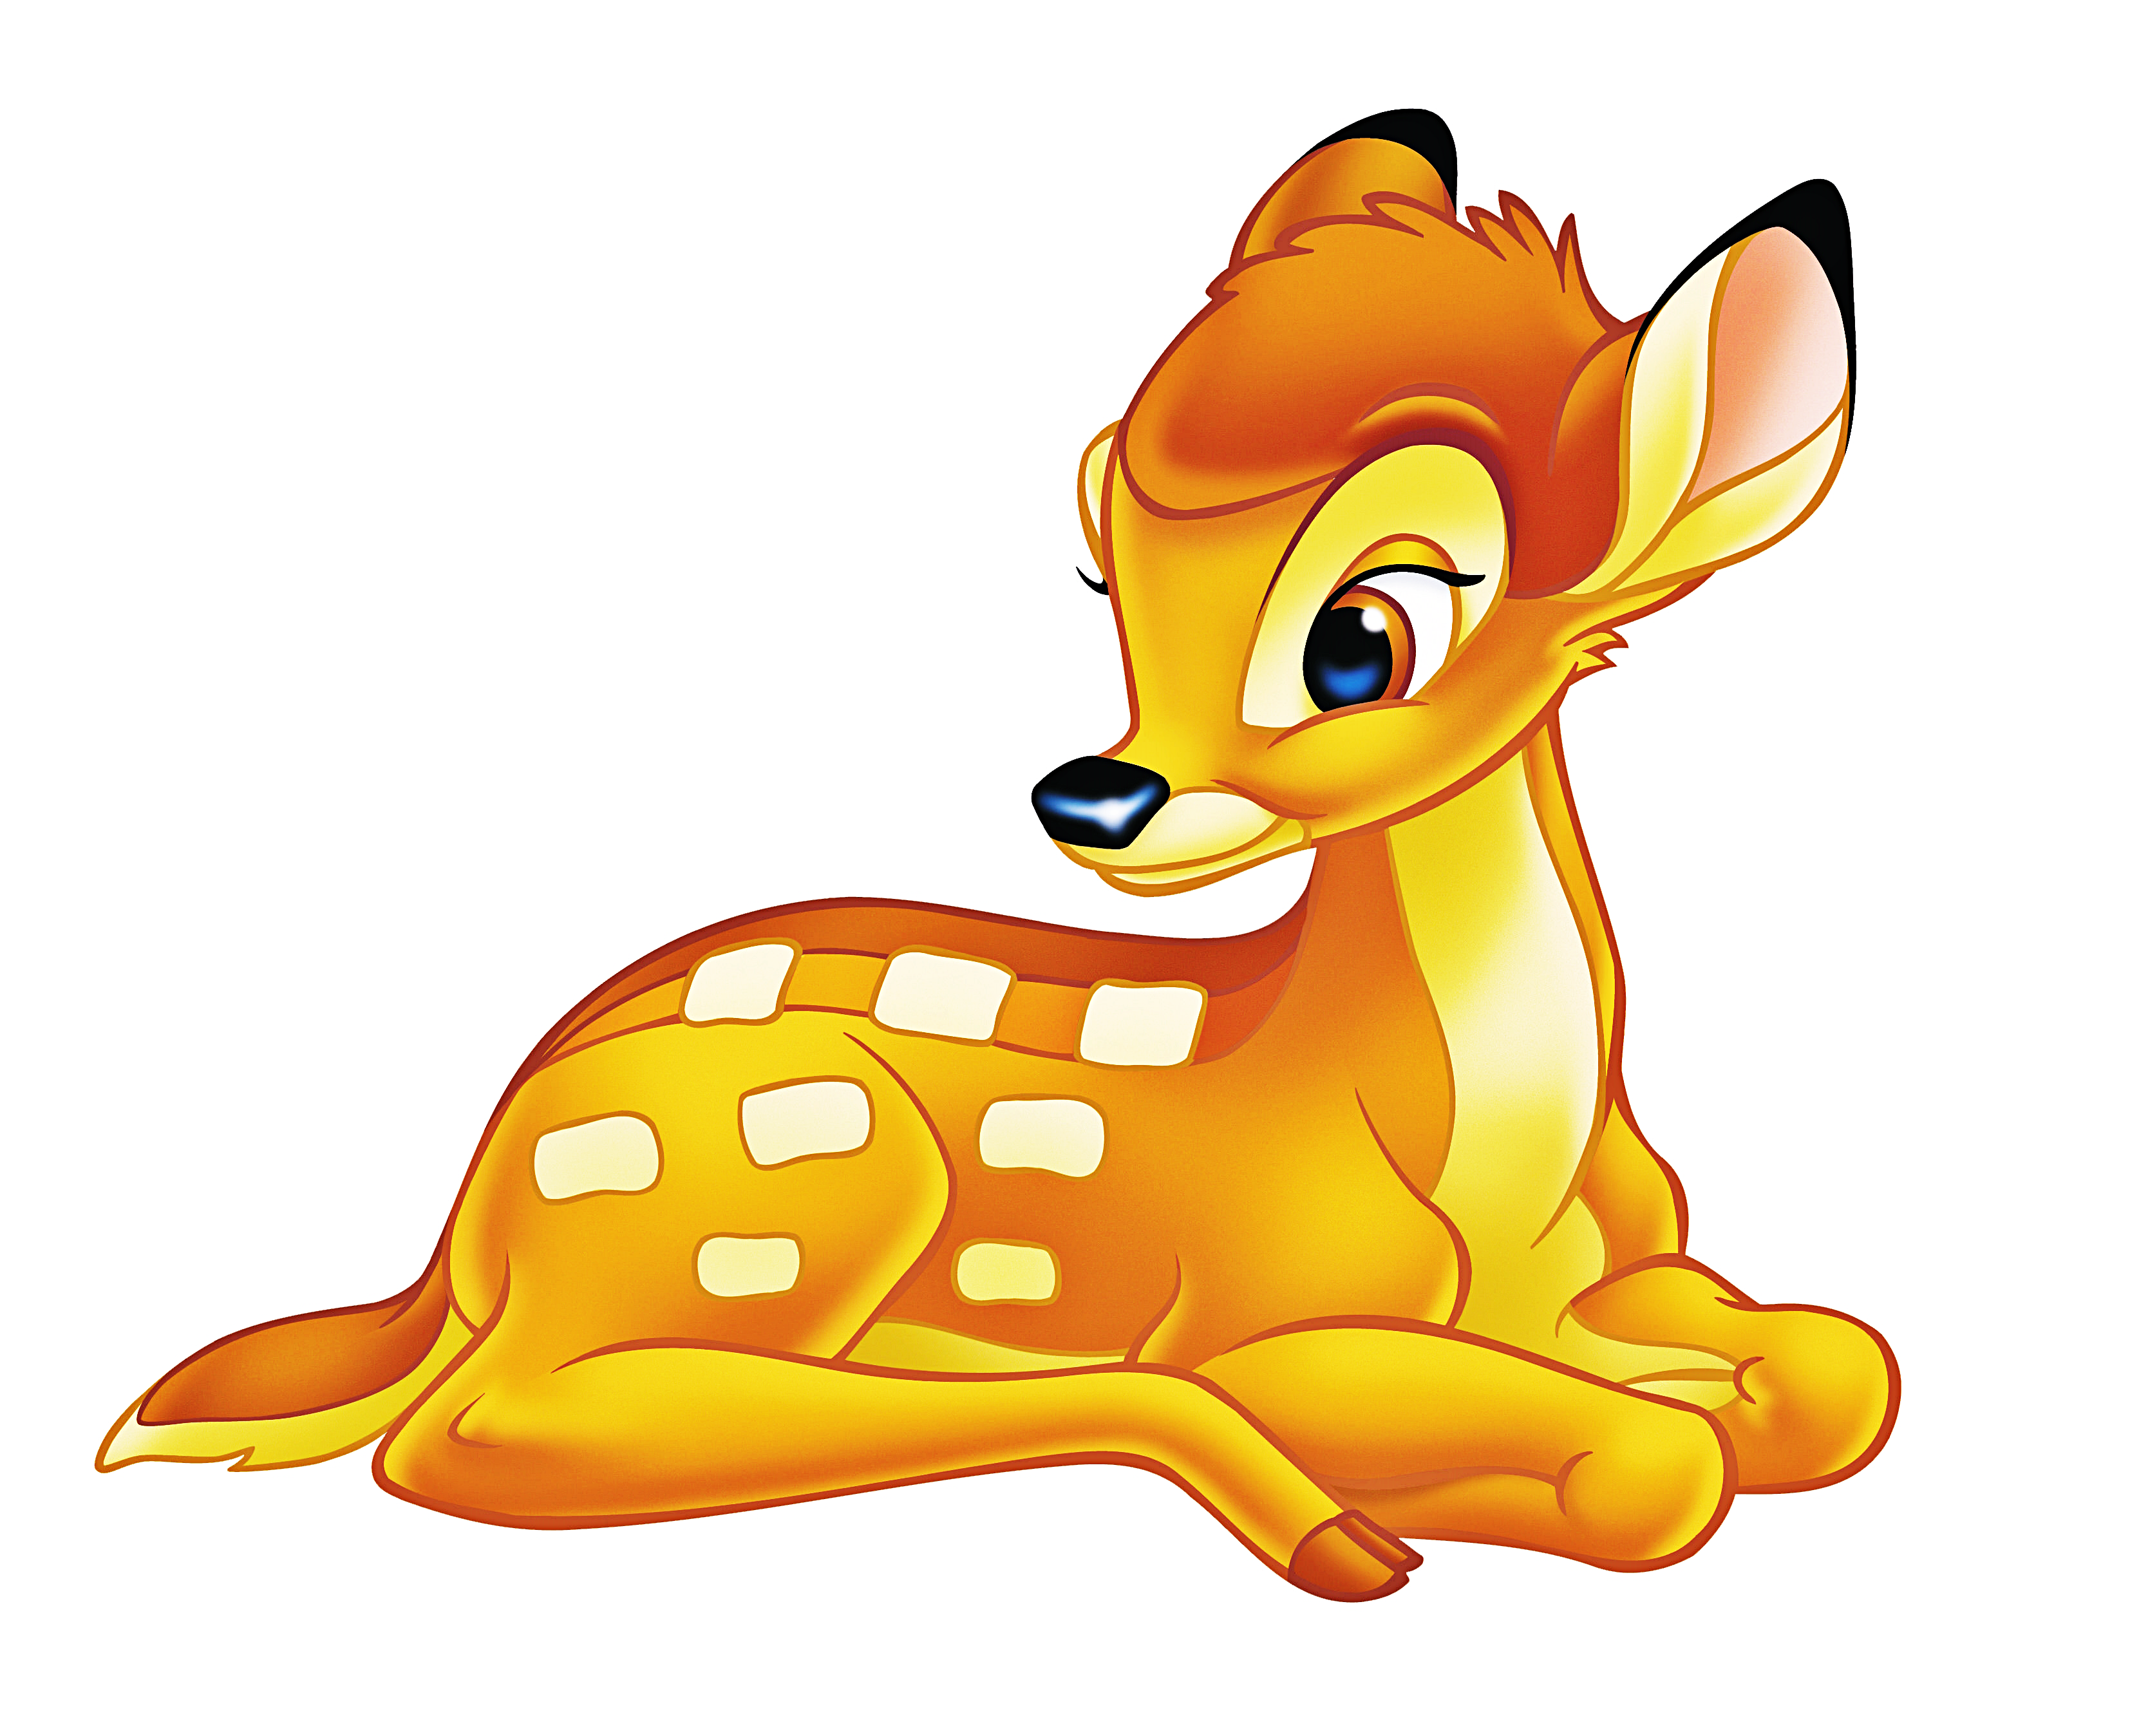 Walt 디즈니 이미지 - Bambi - 월트 디즈니 캐릭터 사진 (38457921) - 팬팝